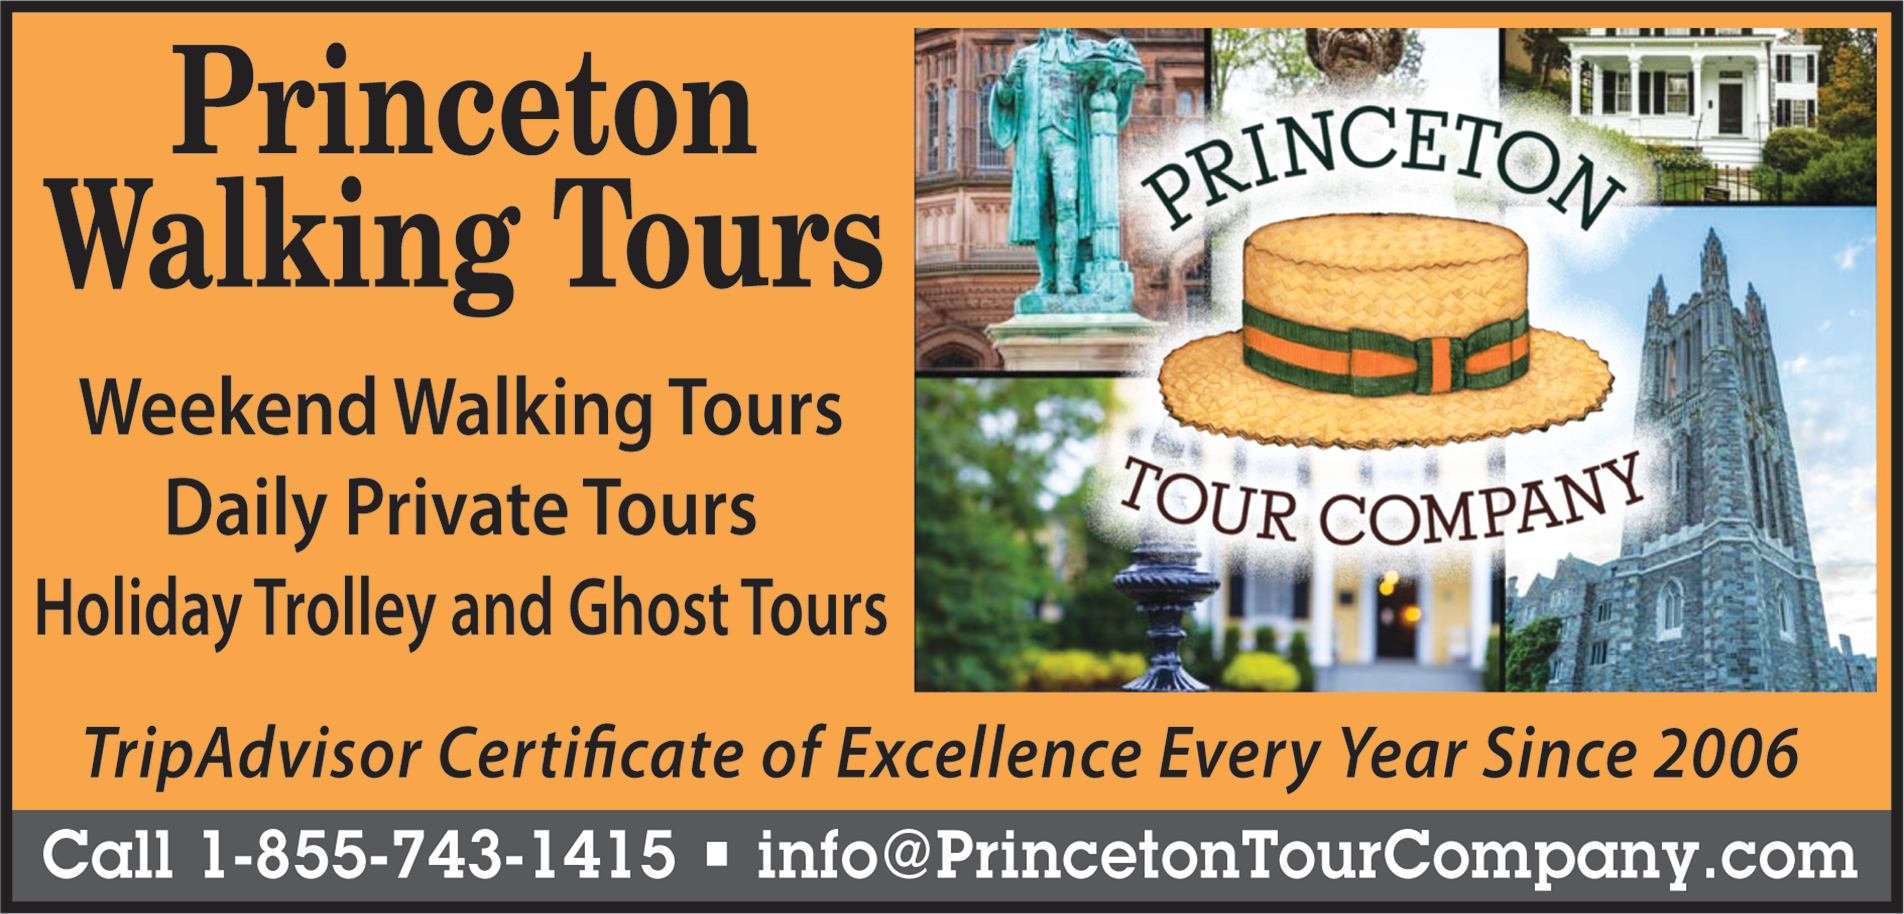 Princeton Tour Company Print Ad